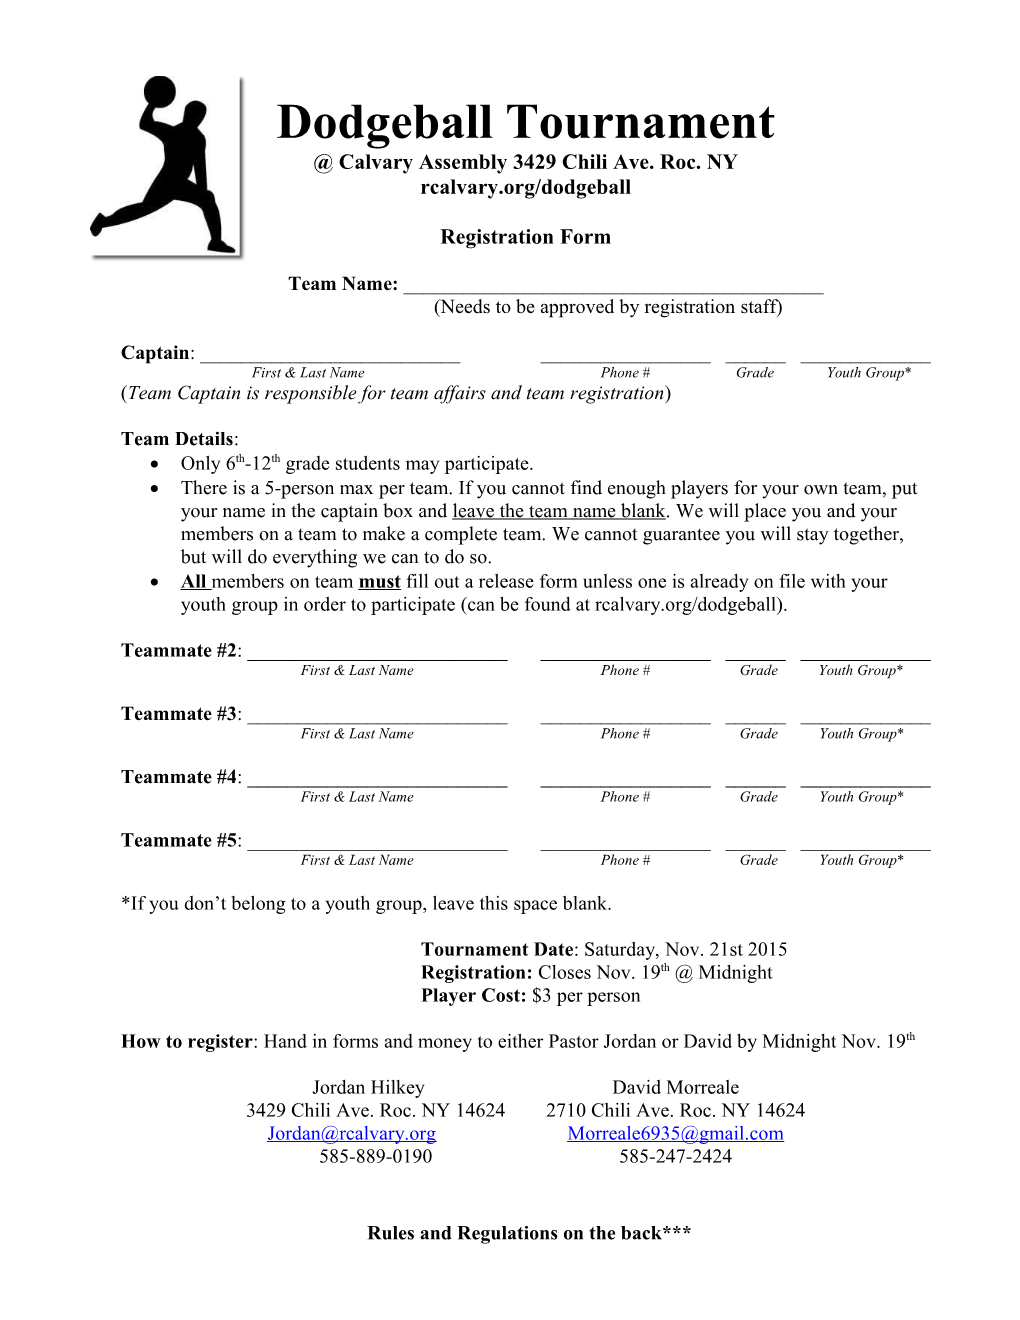 Dodgeball Tournament Registration Form